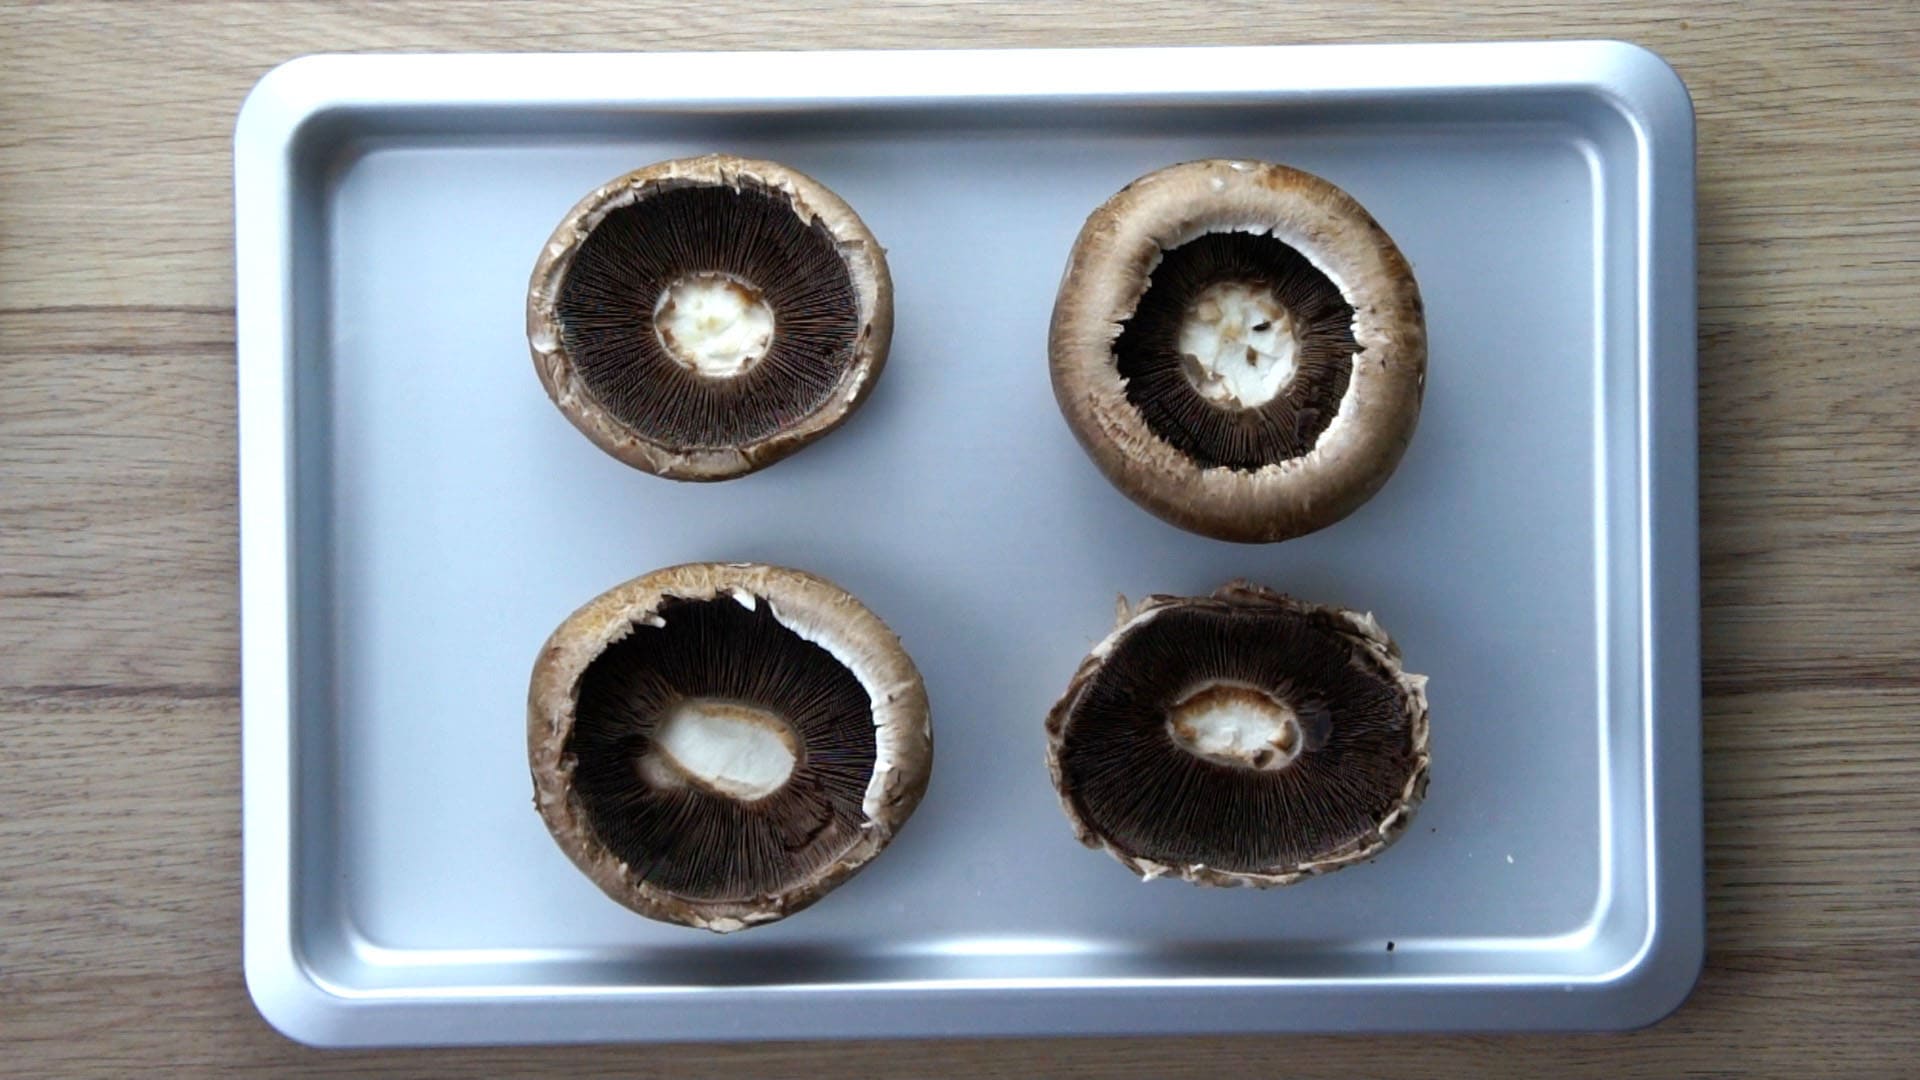 4 large mushroom caps on a baking tray (no stalk) ready to be stuffed